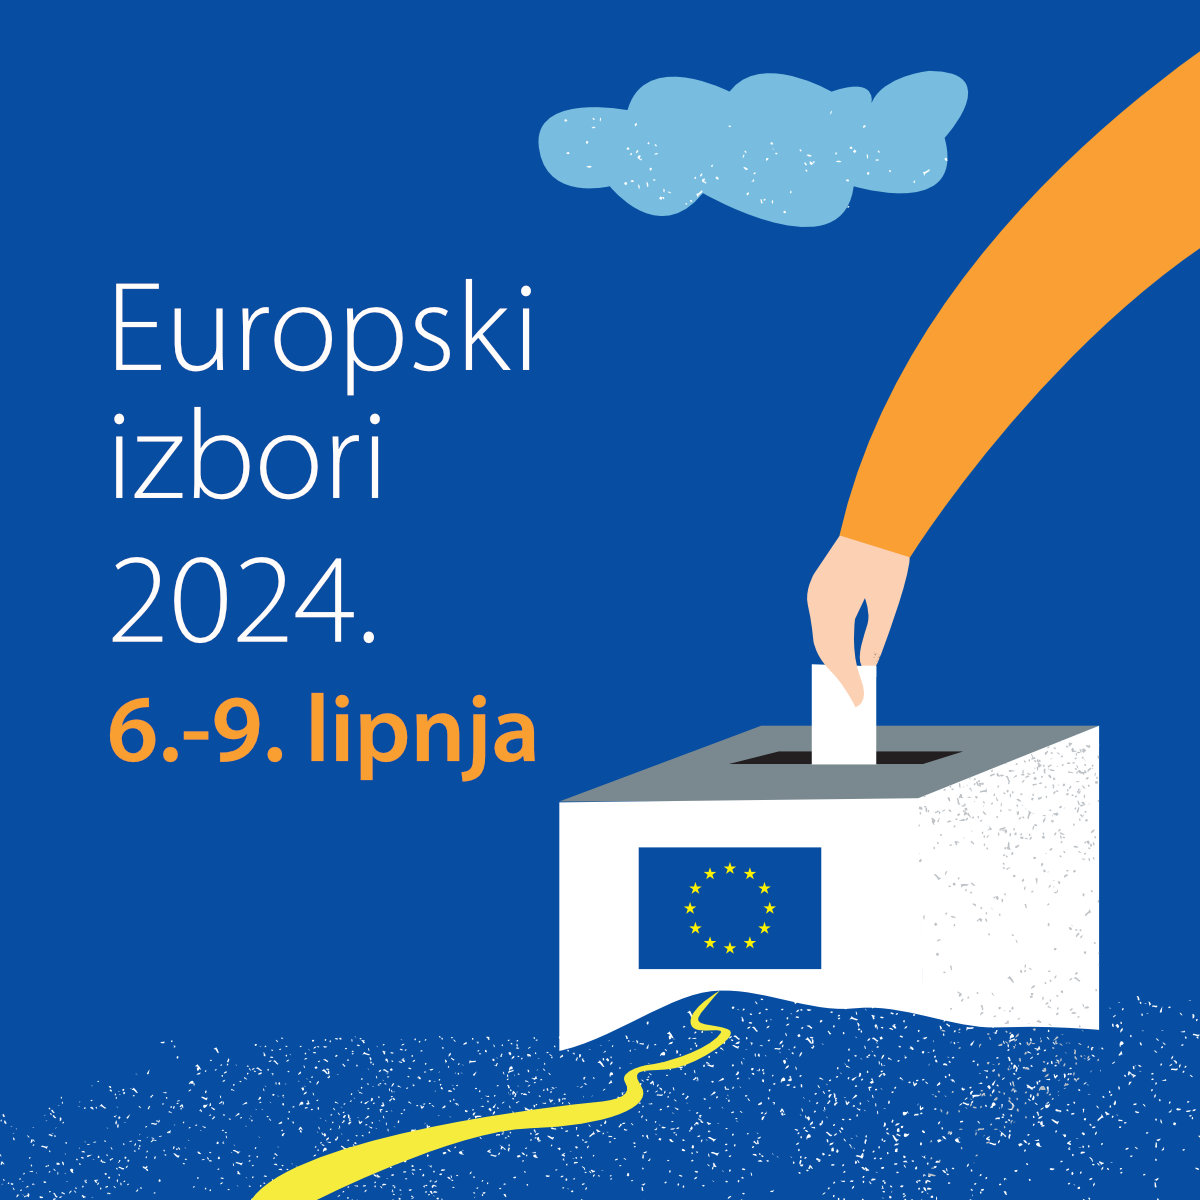 Europski izbori 2024. - Square